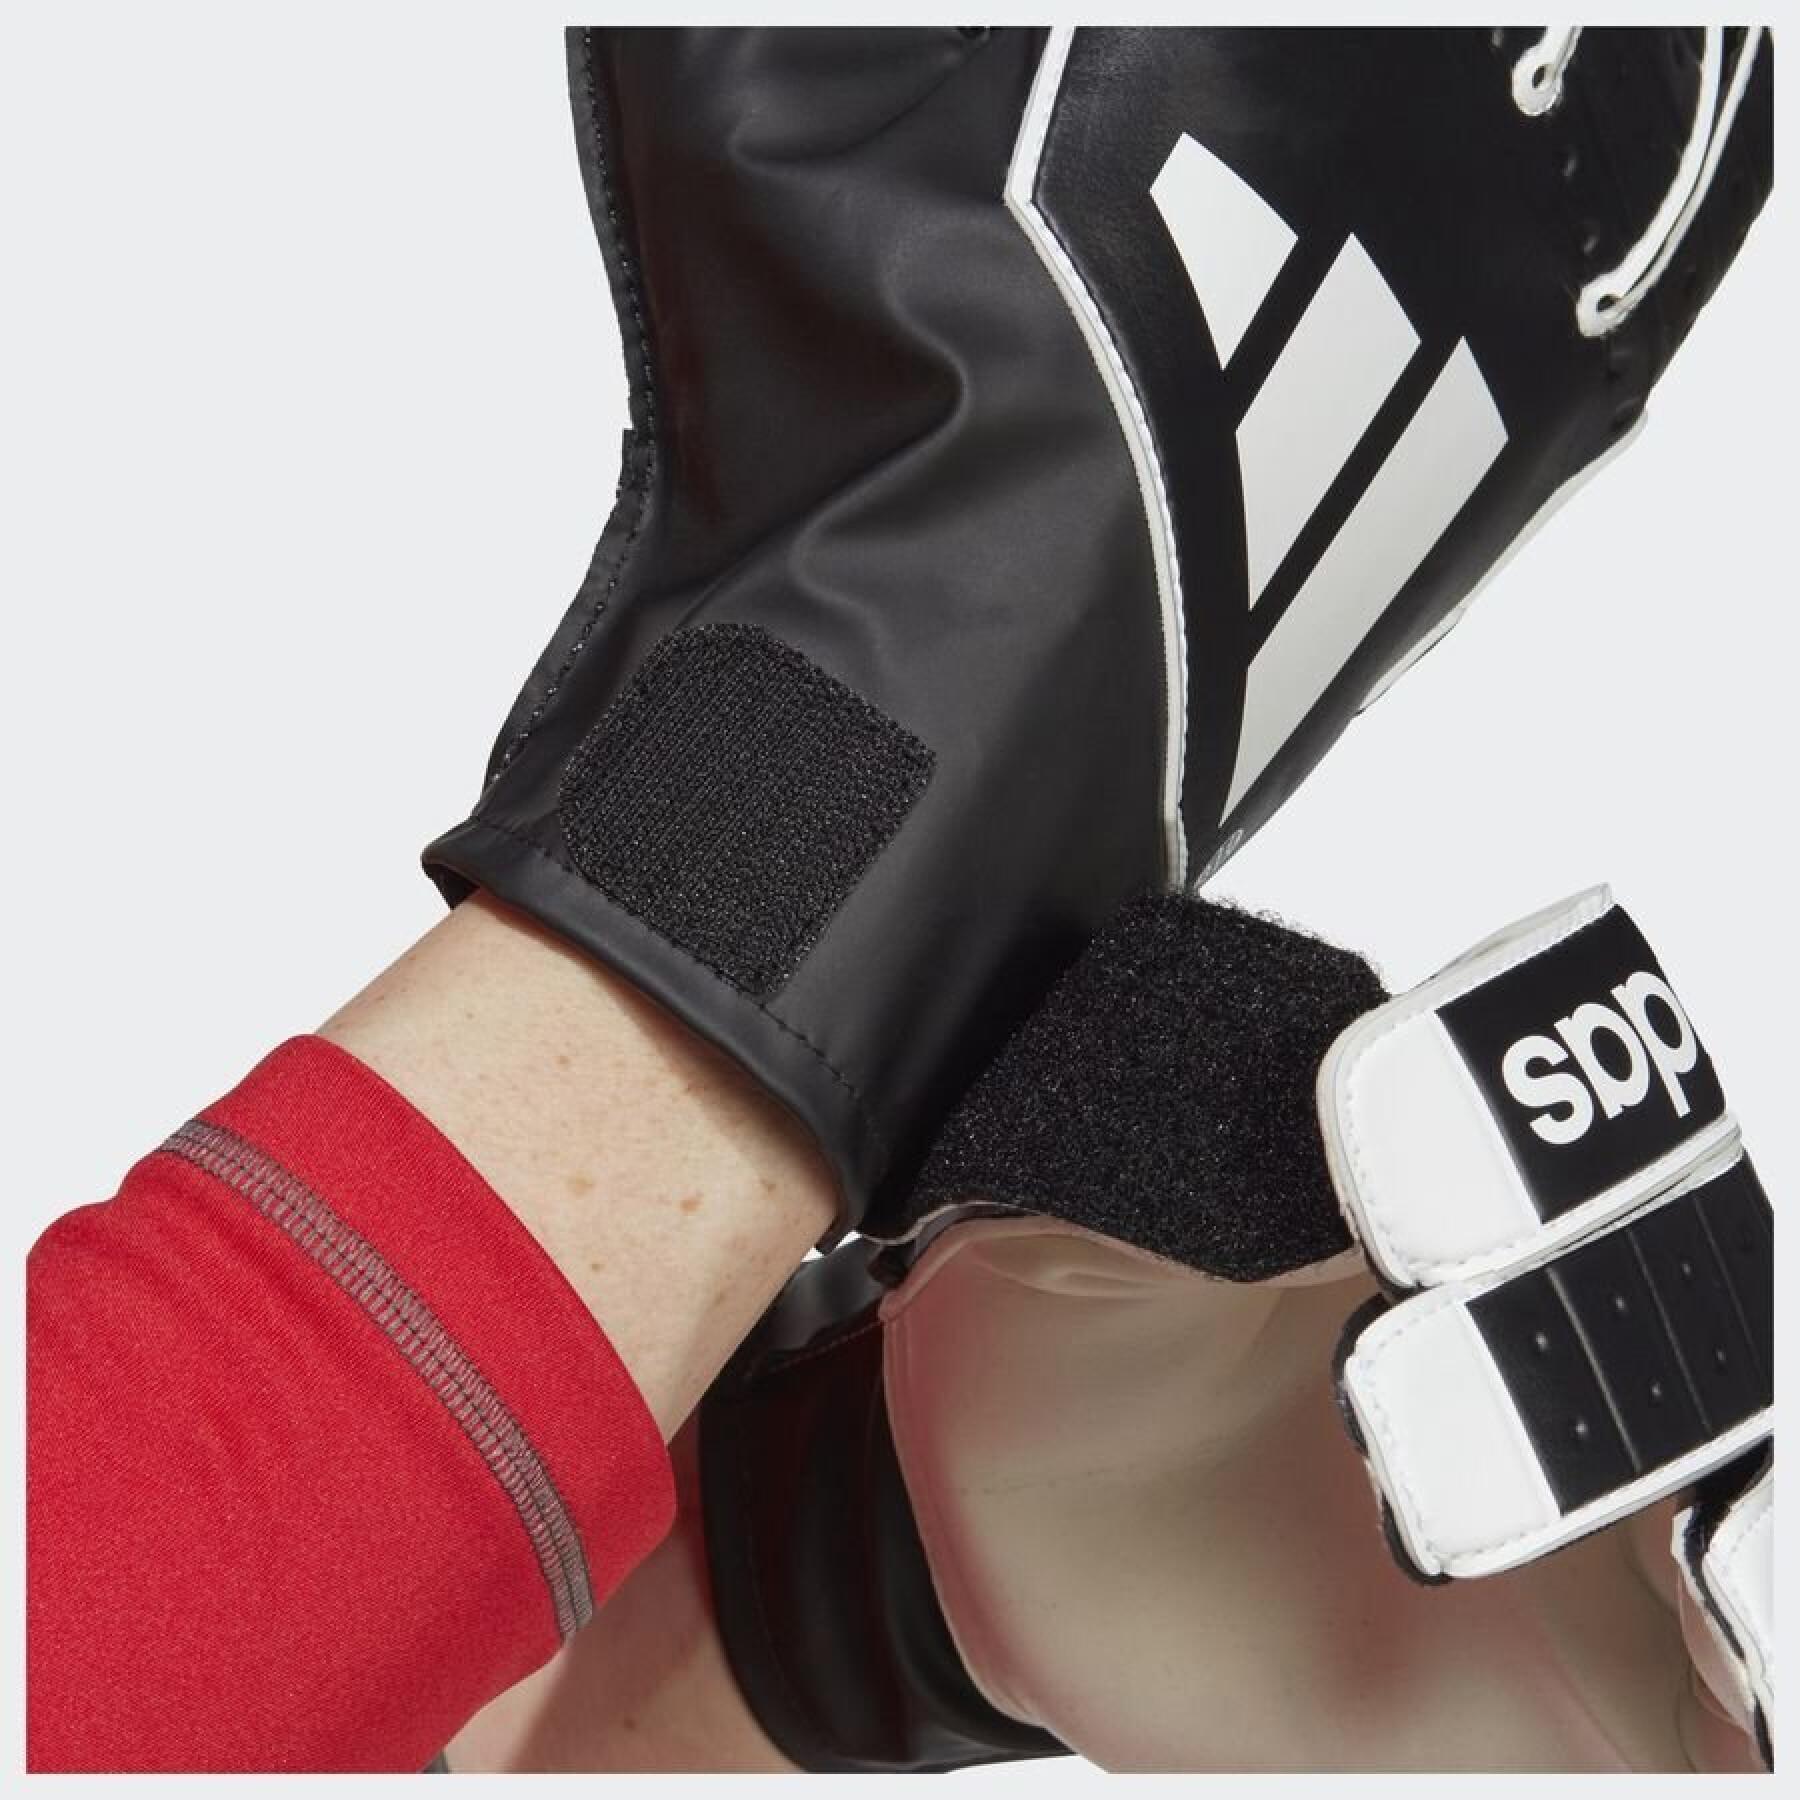 Goalkeeper gloves adidas Tiro Club